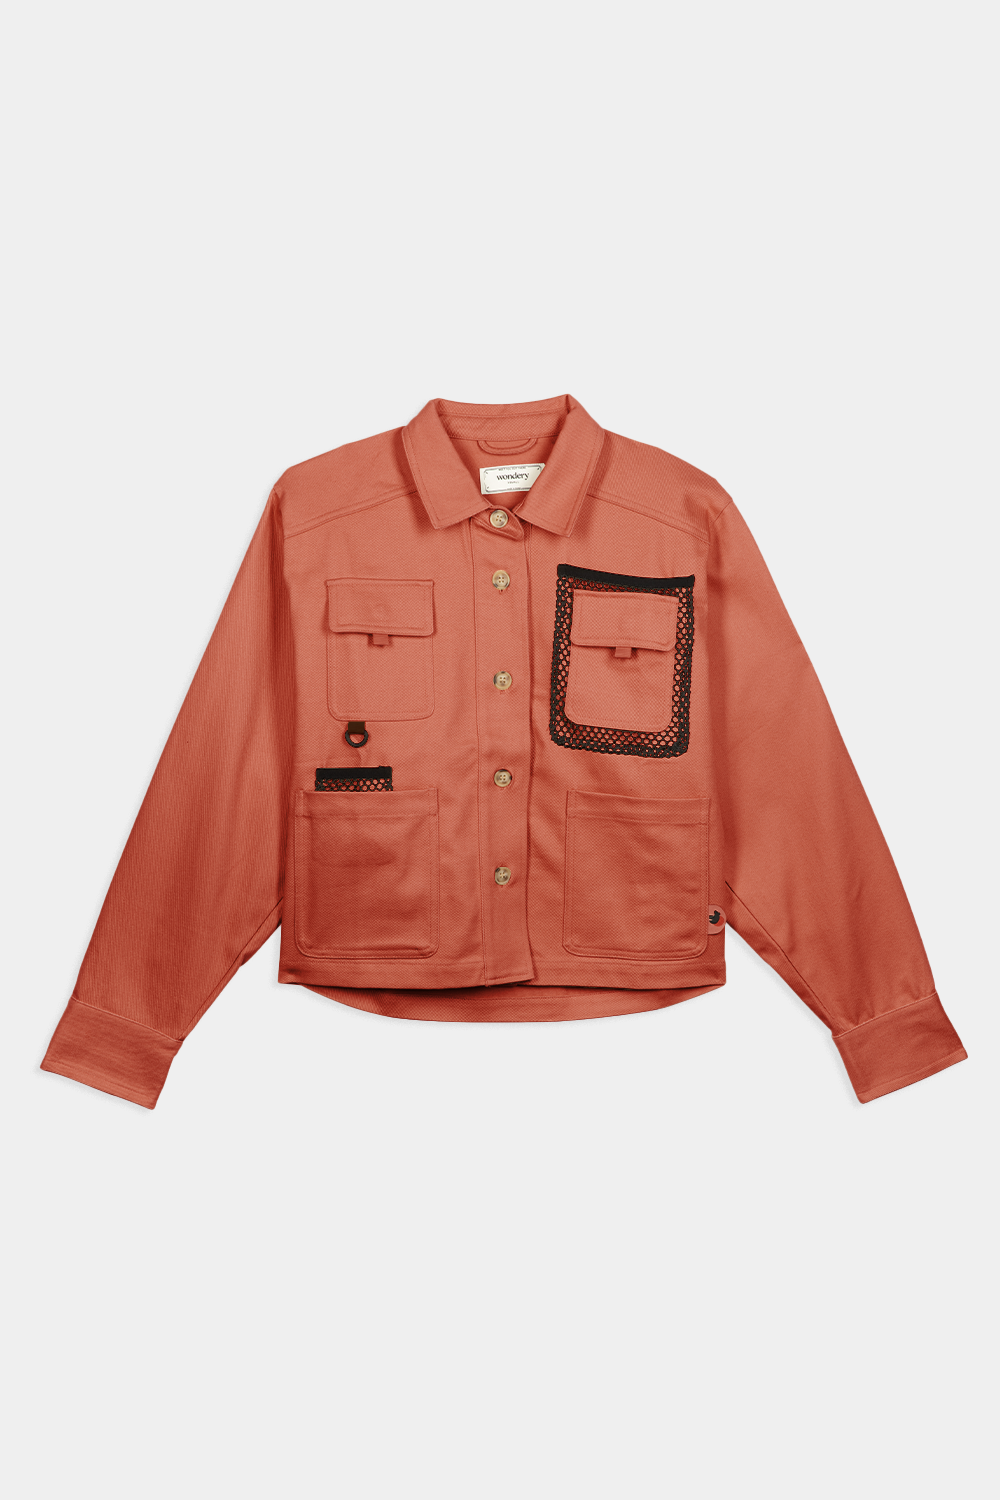 flat lay image of coral red denim 4-pocket long sleeve outdoor denim 4-pocket jacket